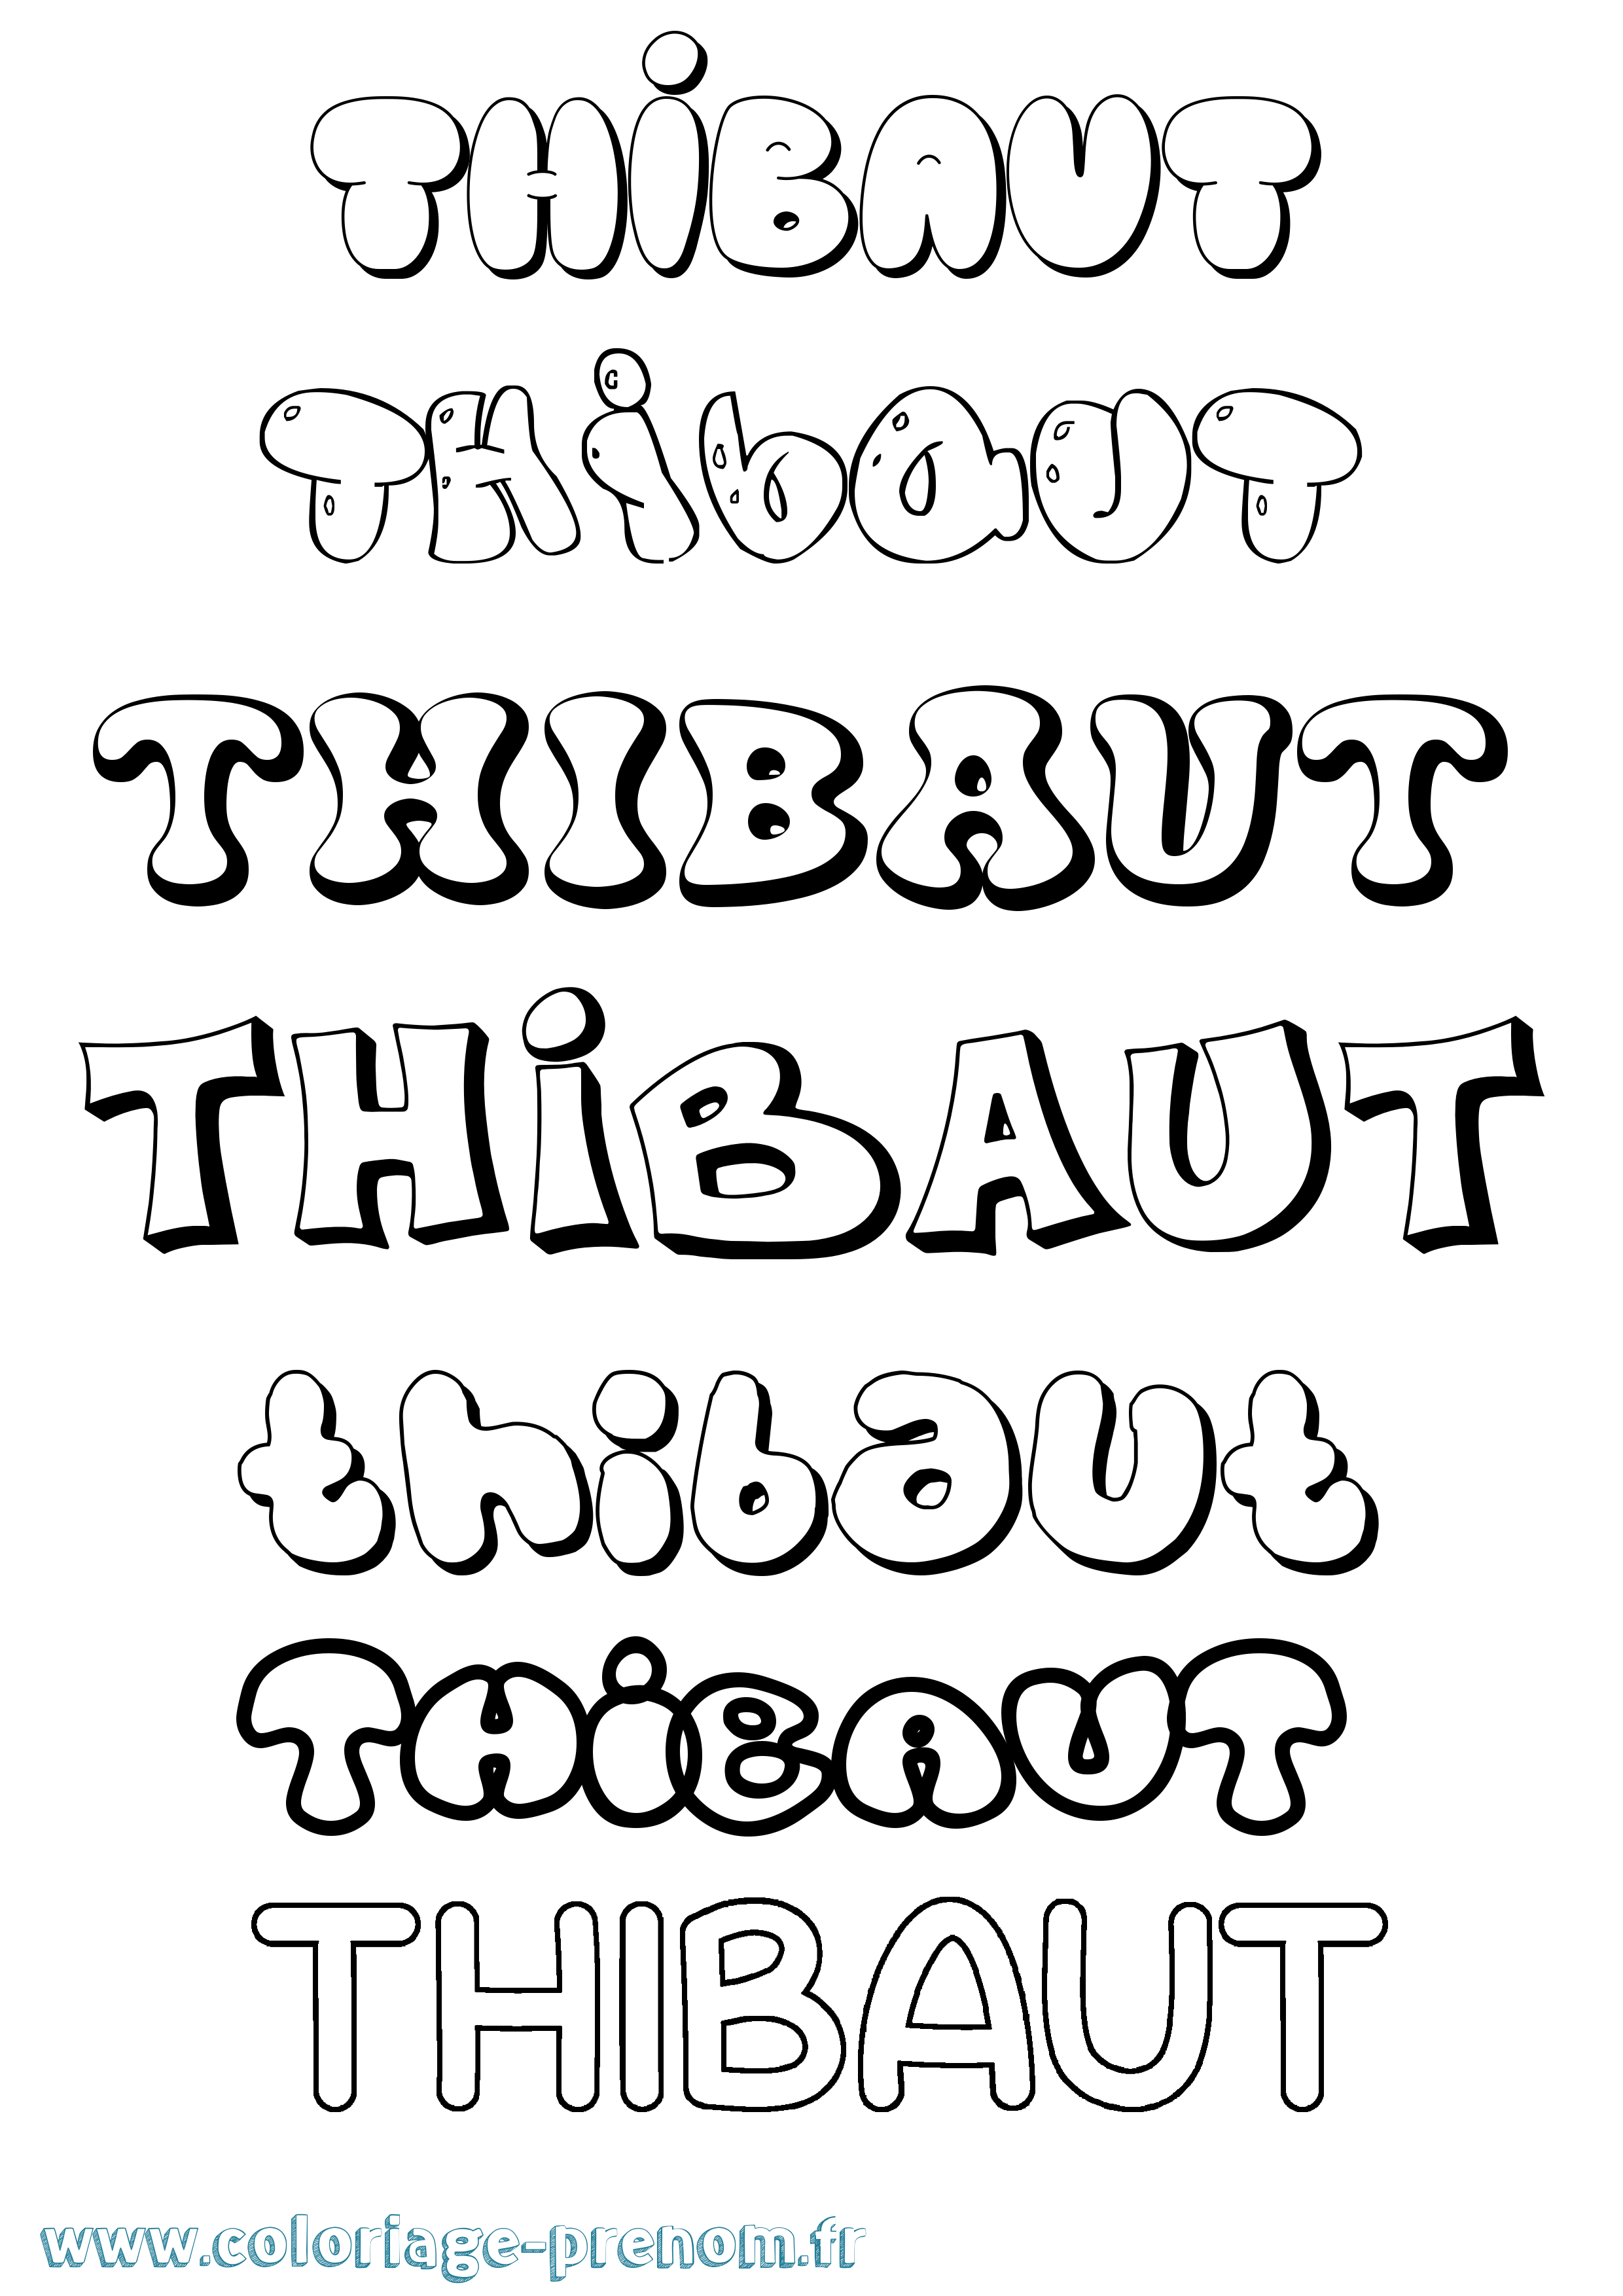 Coloriage prénom Thibaut